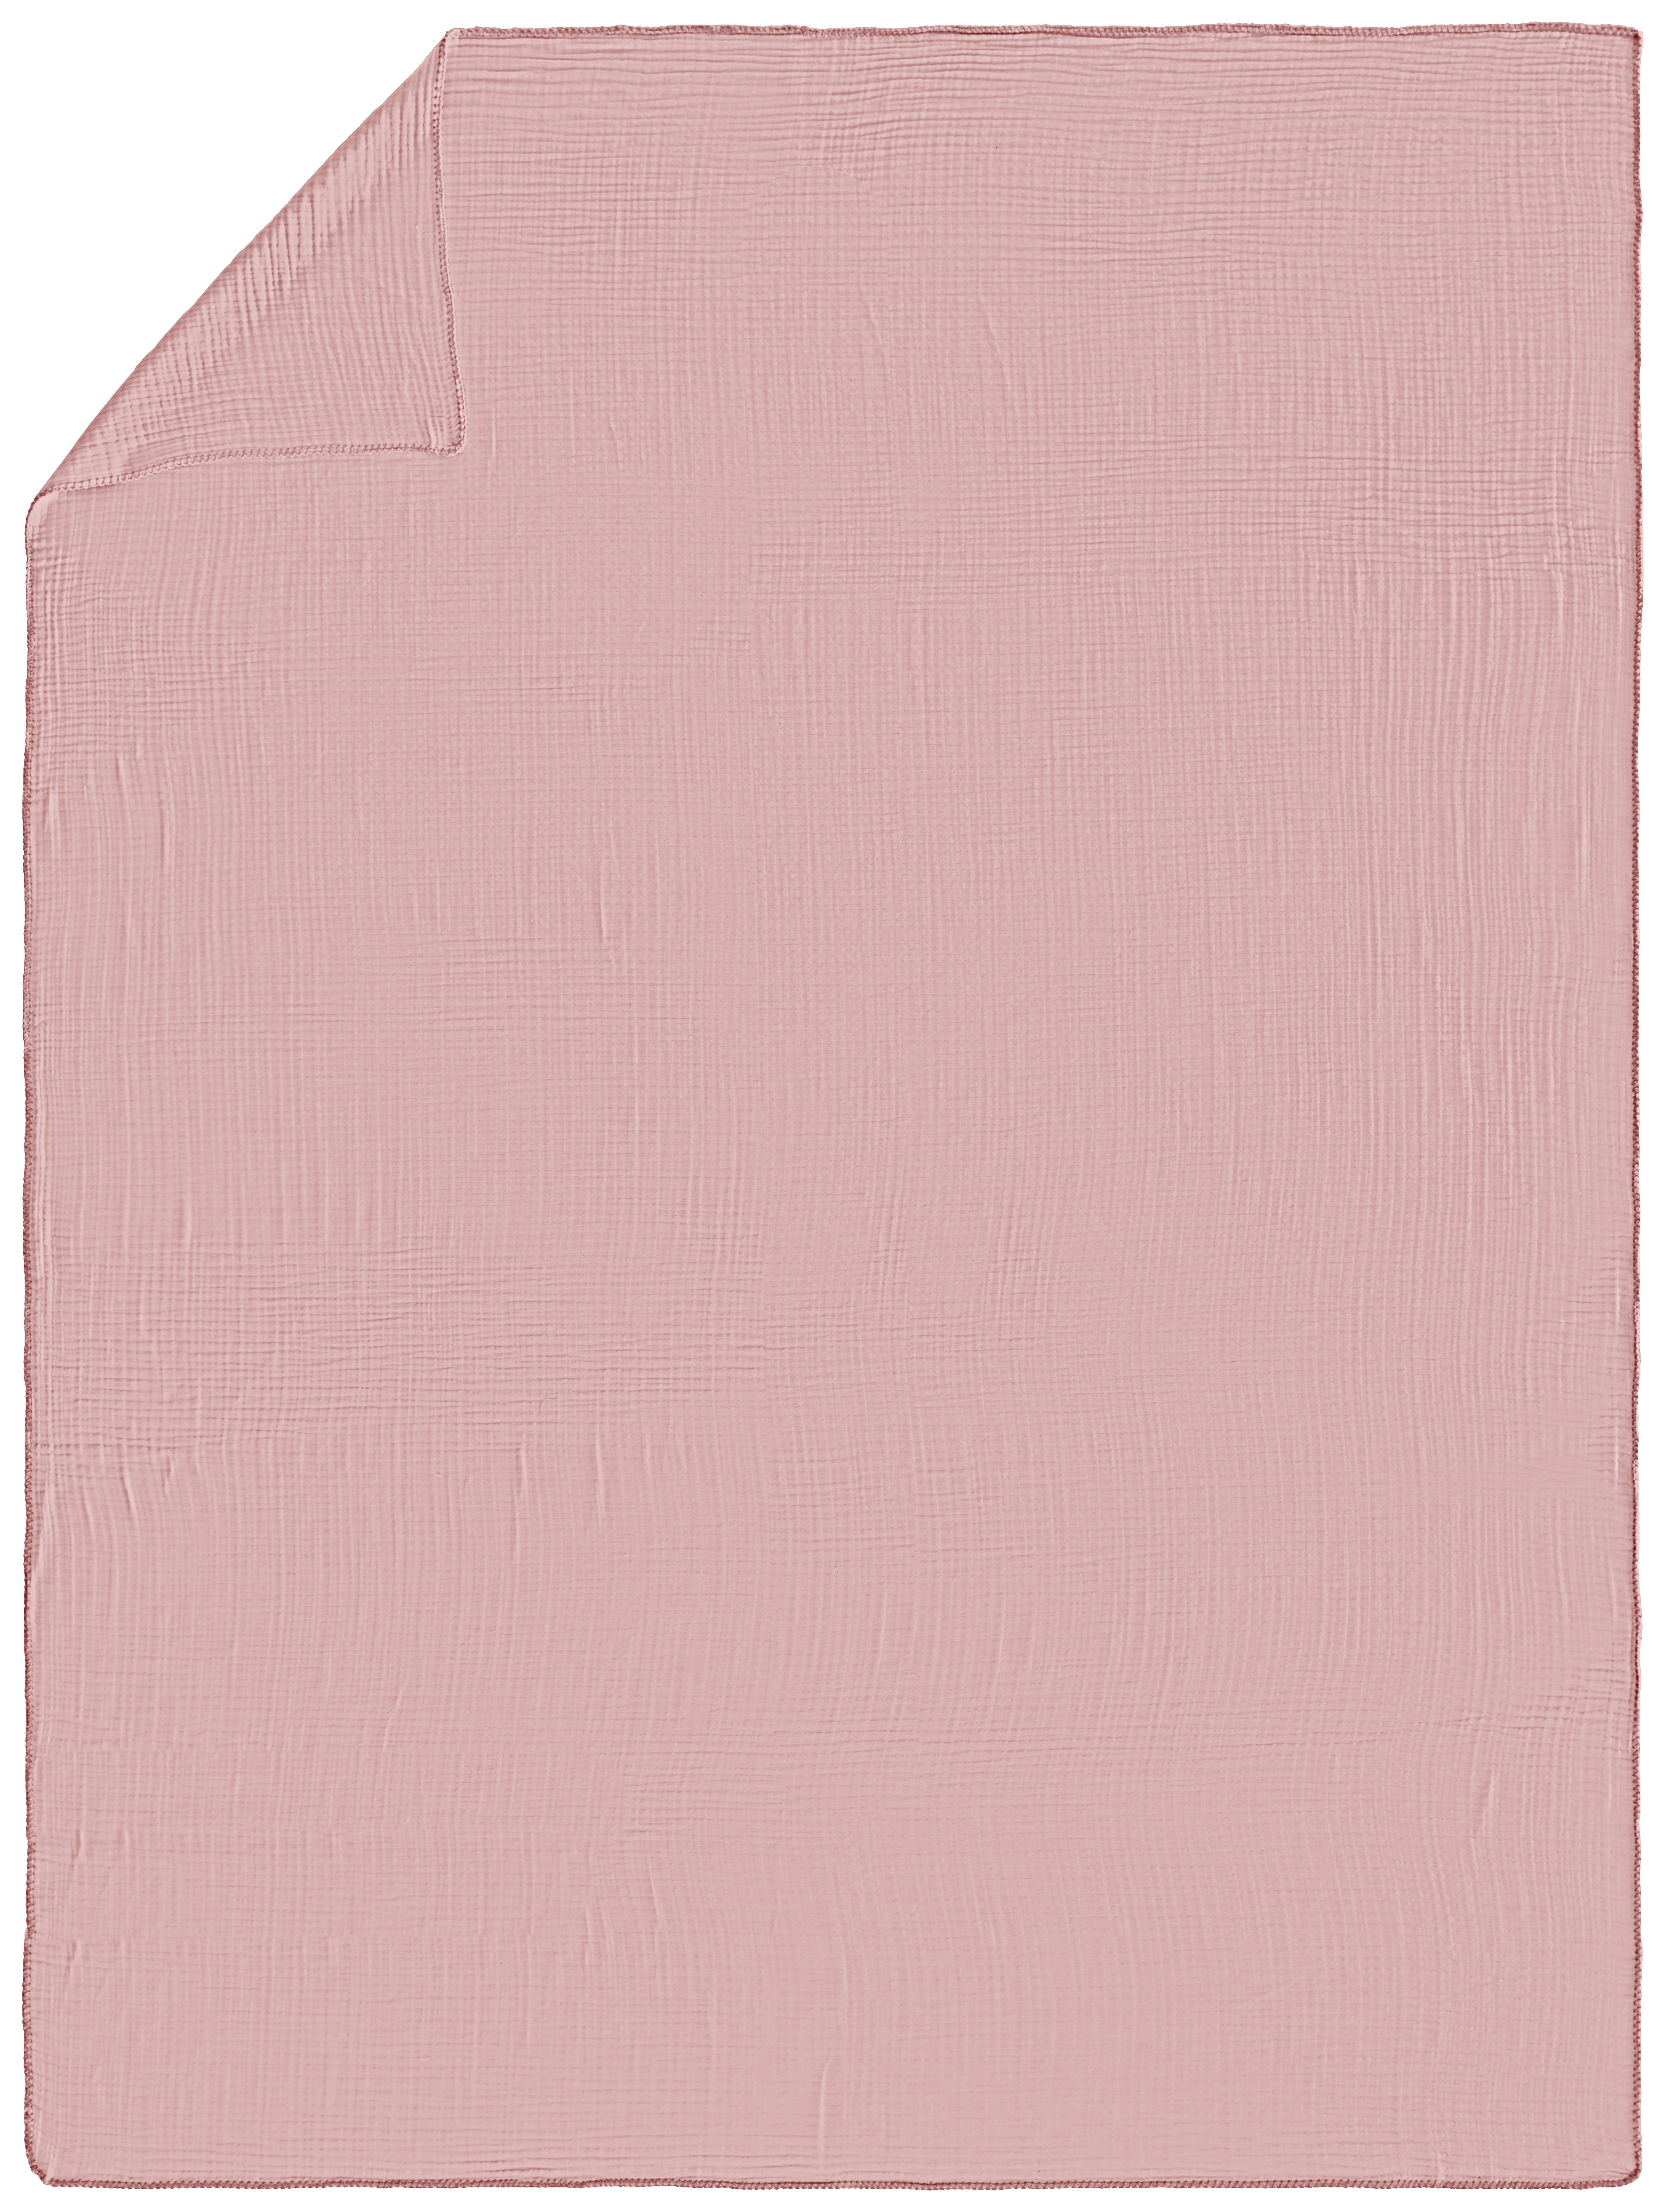 Wohndecke Musselin 150/200 cm Rosa  - Rosa, Design, Textil (150/200cm) - Novel